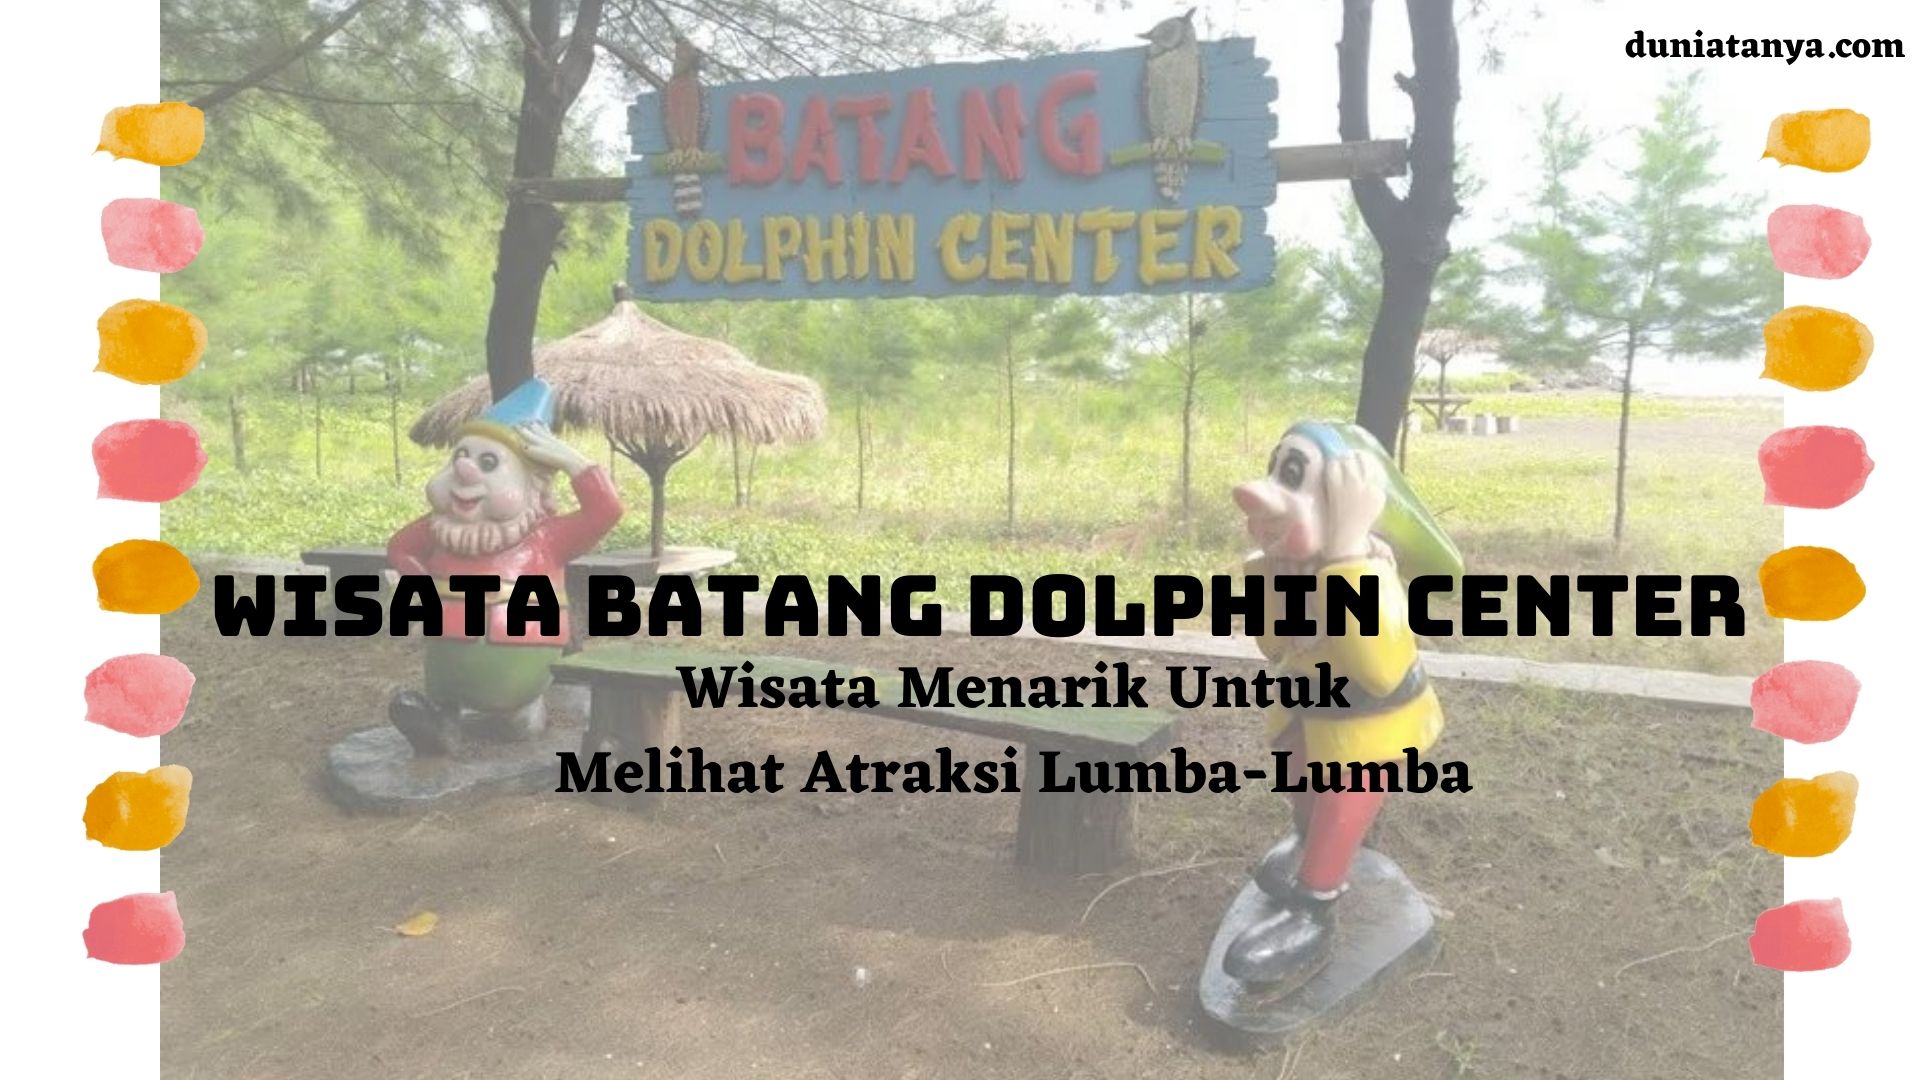 You are currently viewing Wisata Batang Dolphin Center,Wisata Menarik Untuk Melihat Atraksi Lumba-Lumba